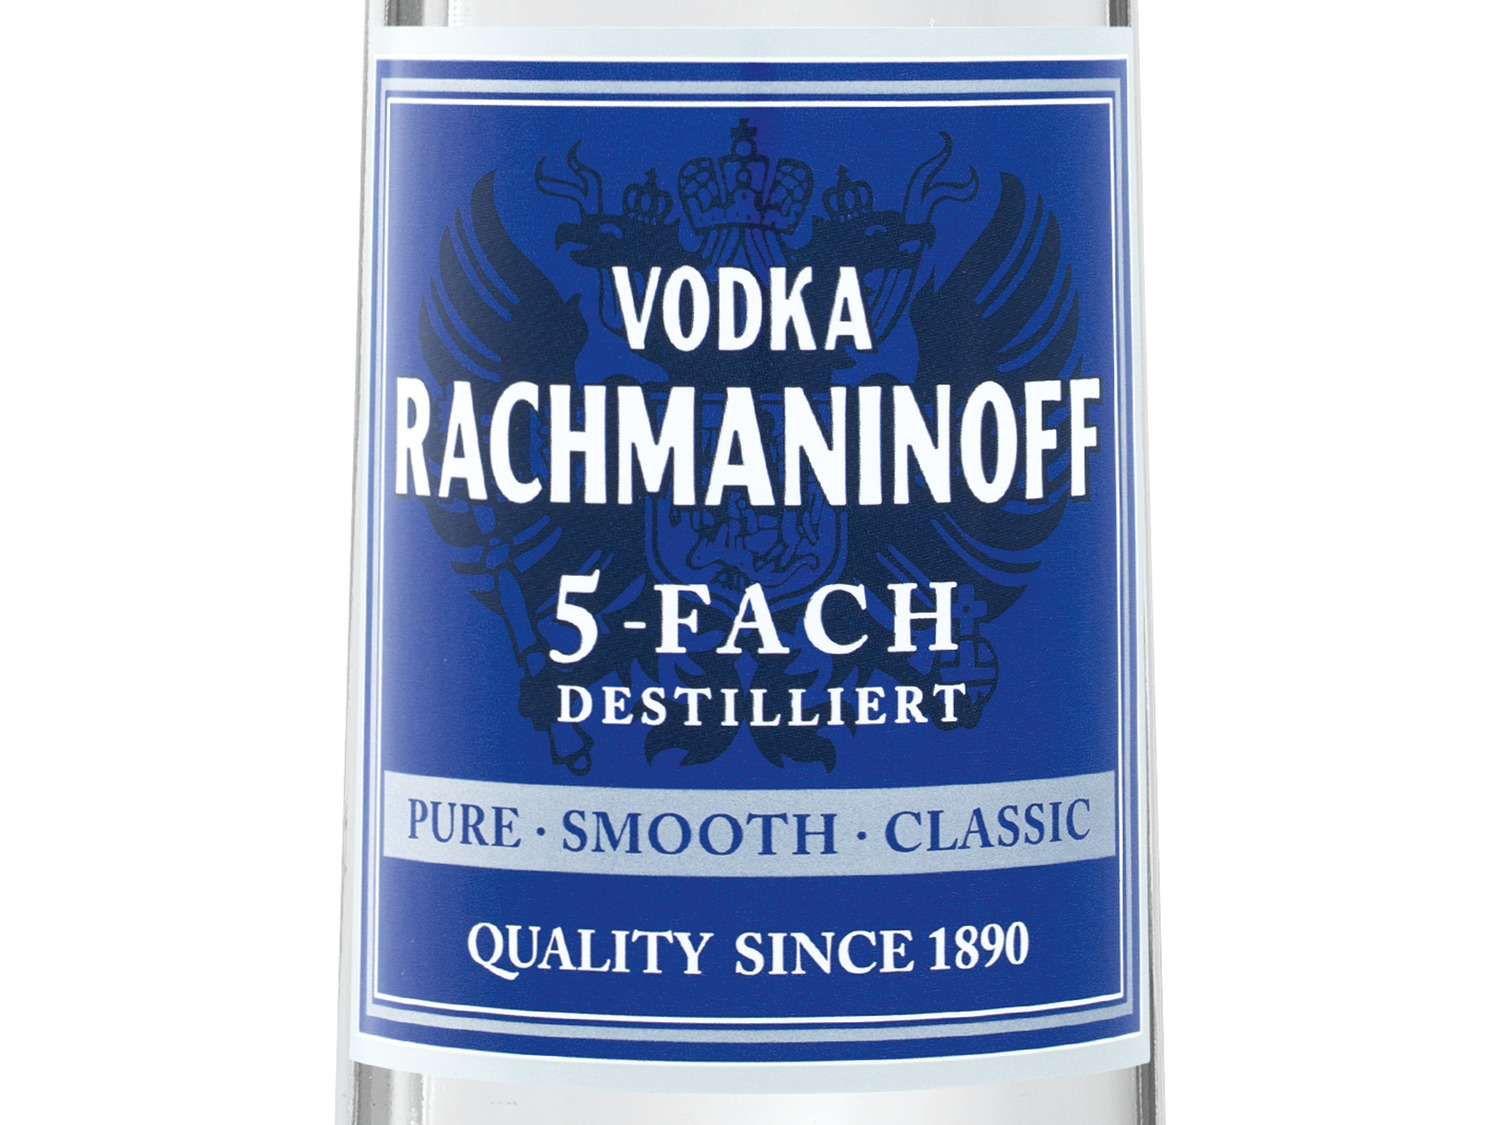 RACHMANINOFF Wodka 5-fach destilliert LIDL Vol | 40